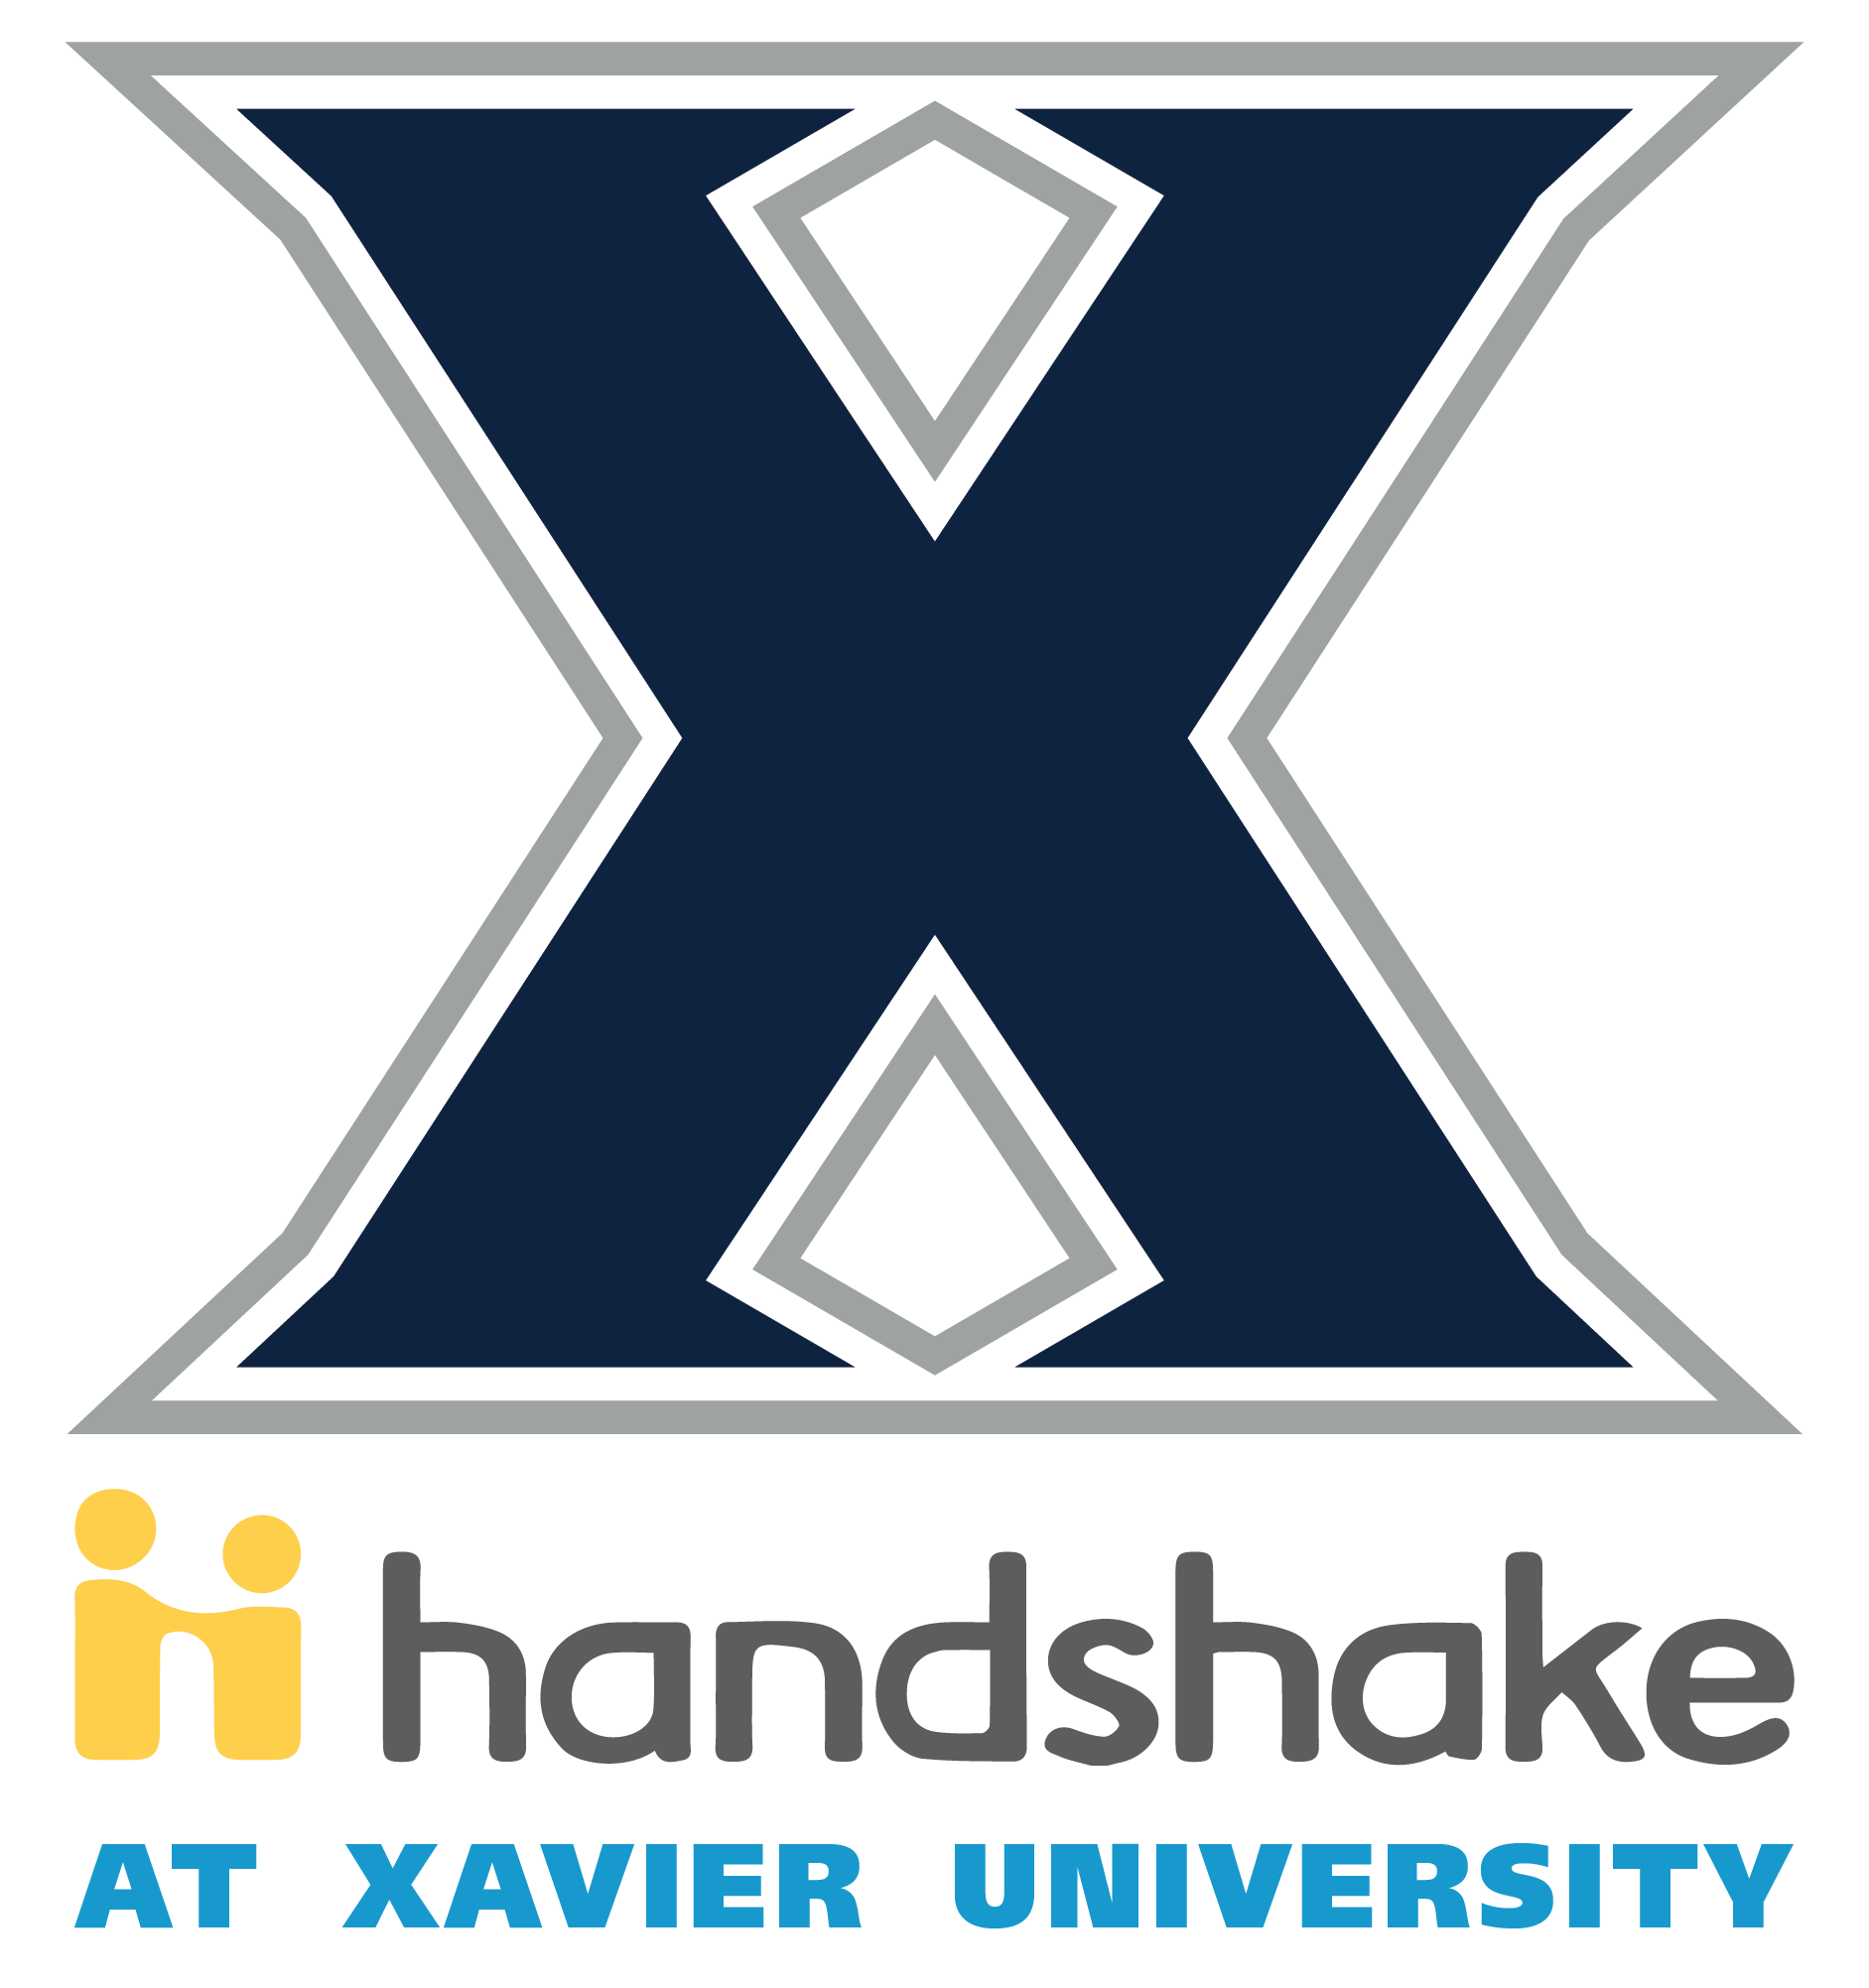 Handshake at Xavier Univeristy